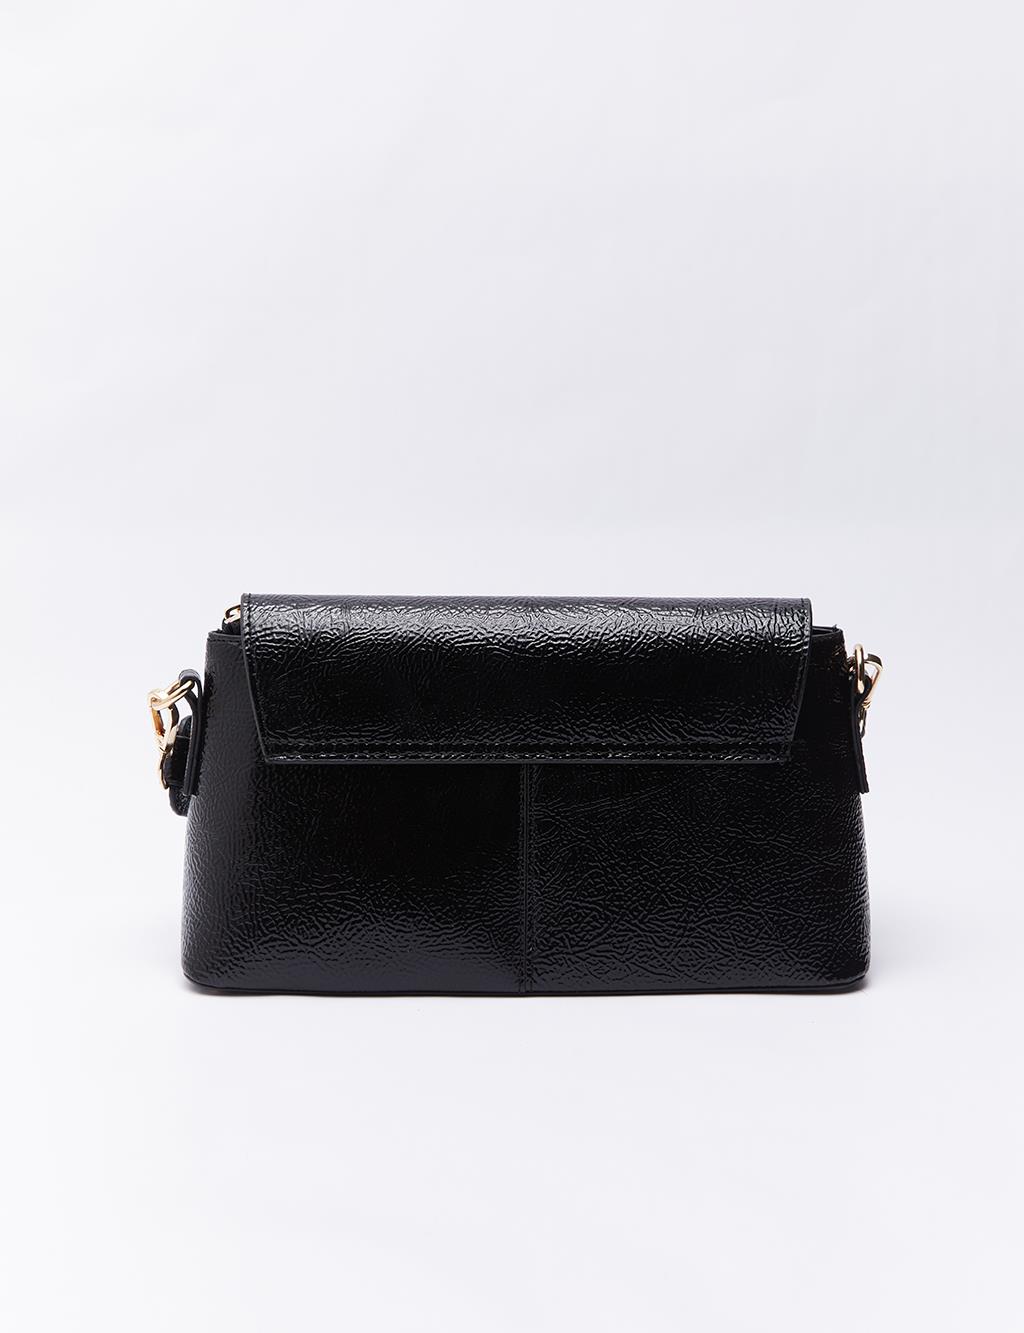 Patent Leather Baguette Bag Black